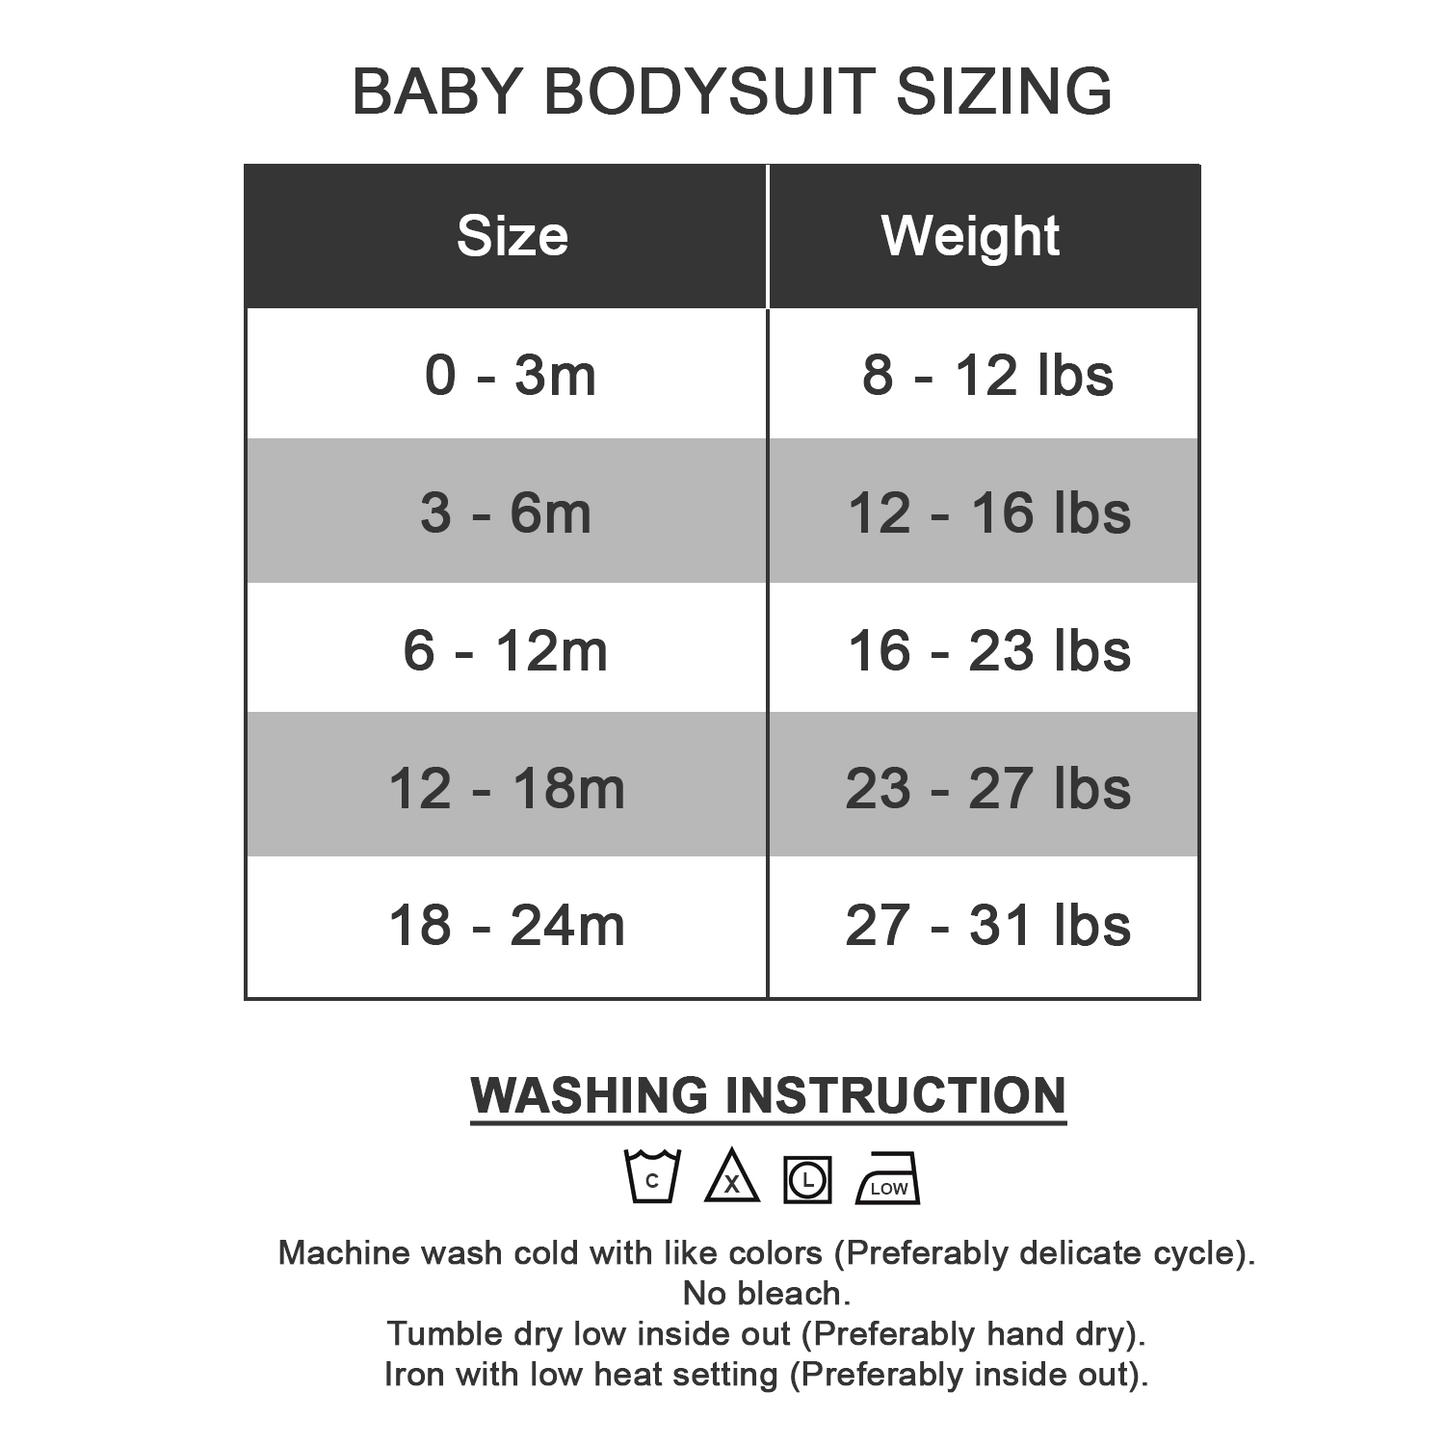 Player 3 Pregnancy Announcement Funny Organic Baby Bodysuit